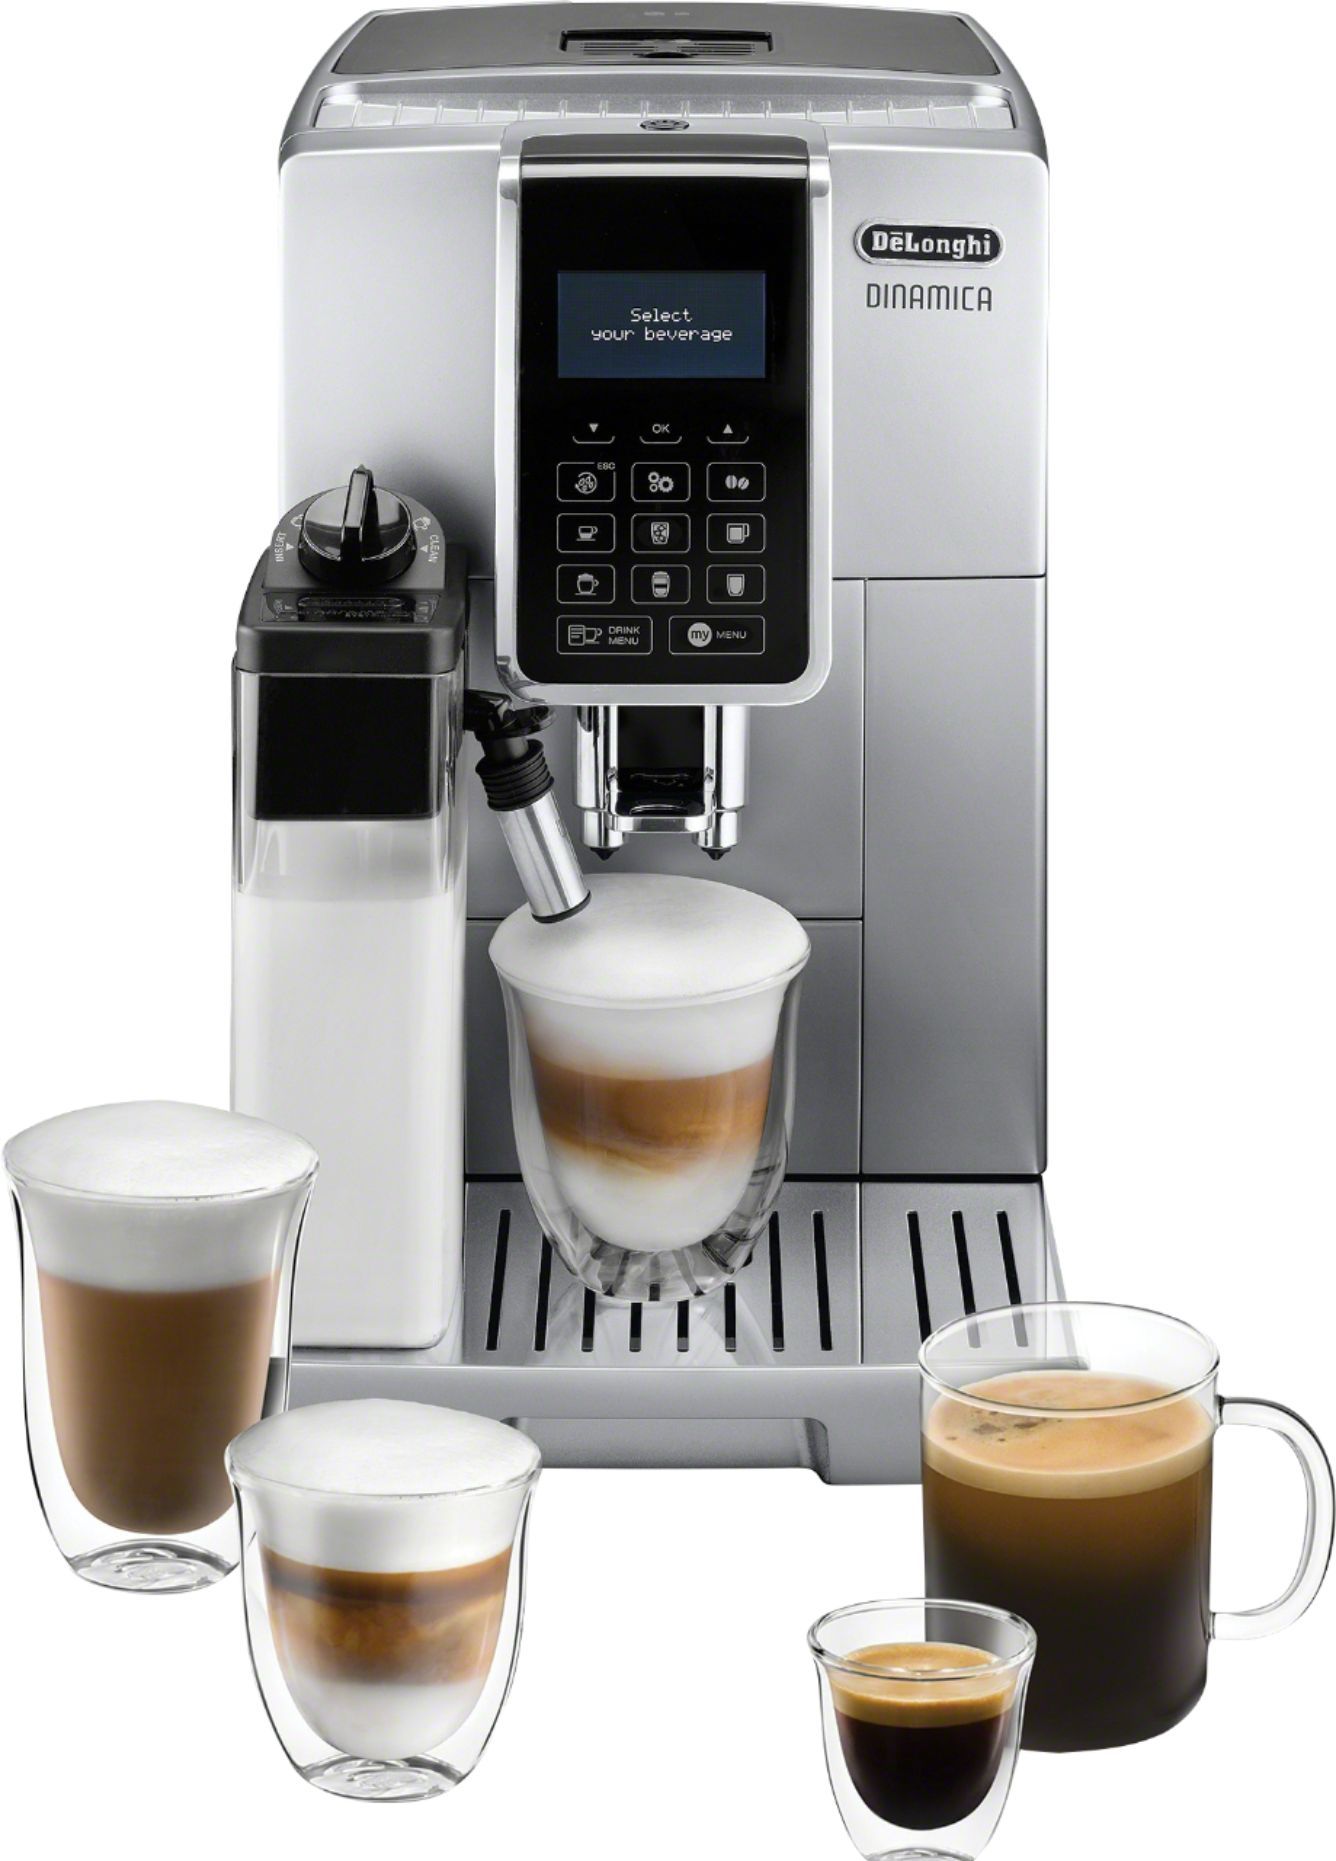 De'Longhi Dinamica Espresso Machine with 15 bars of pressure and LatteCrema Fully Automatic Milk ... | Best Buy U.S.